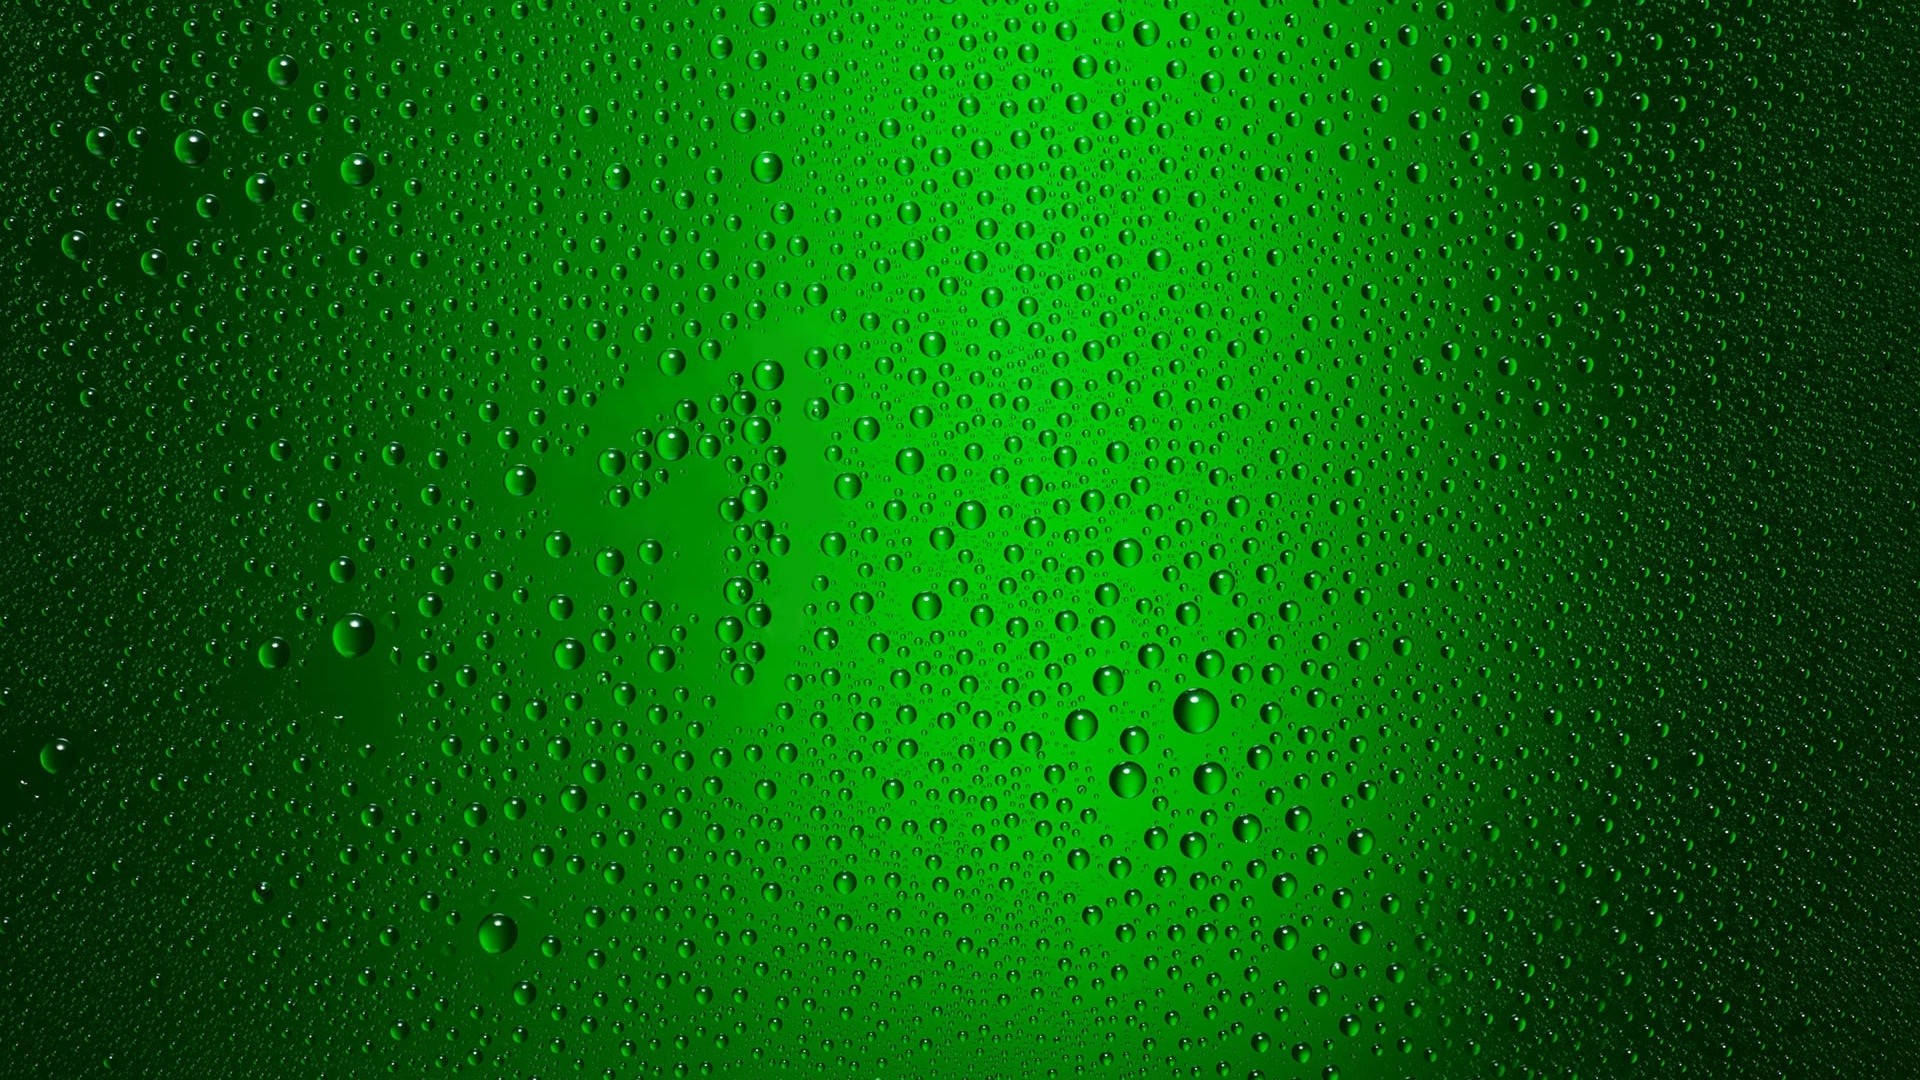 Misty Plain Green Wallpaper